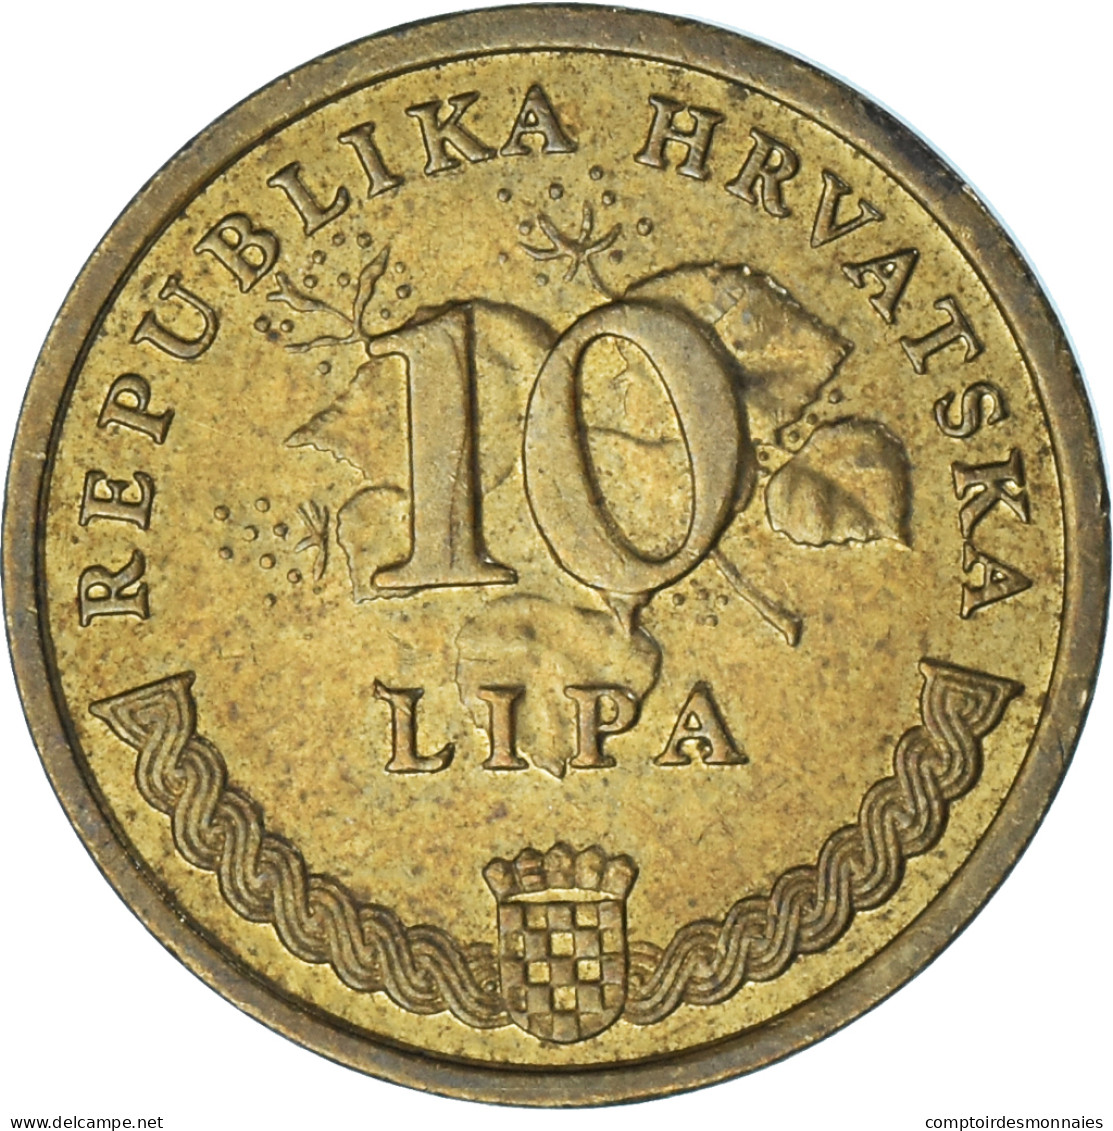 Monnaie, Croatie, 10 Lipa, 2007 - Croatia